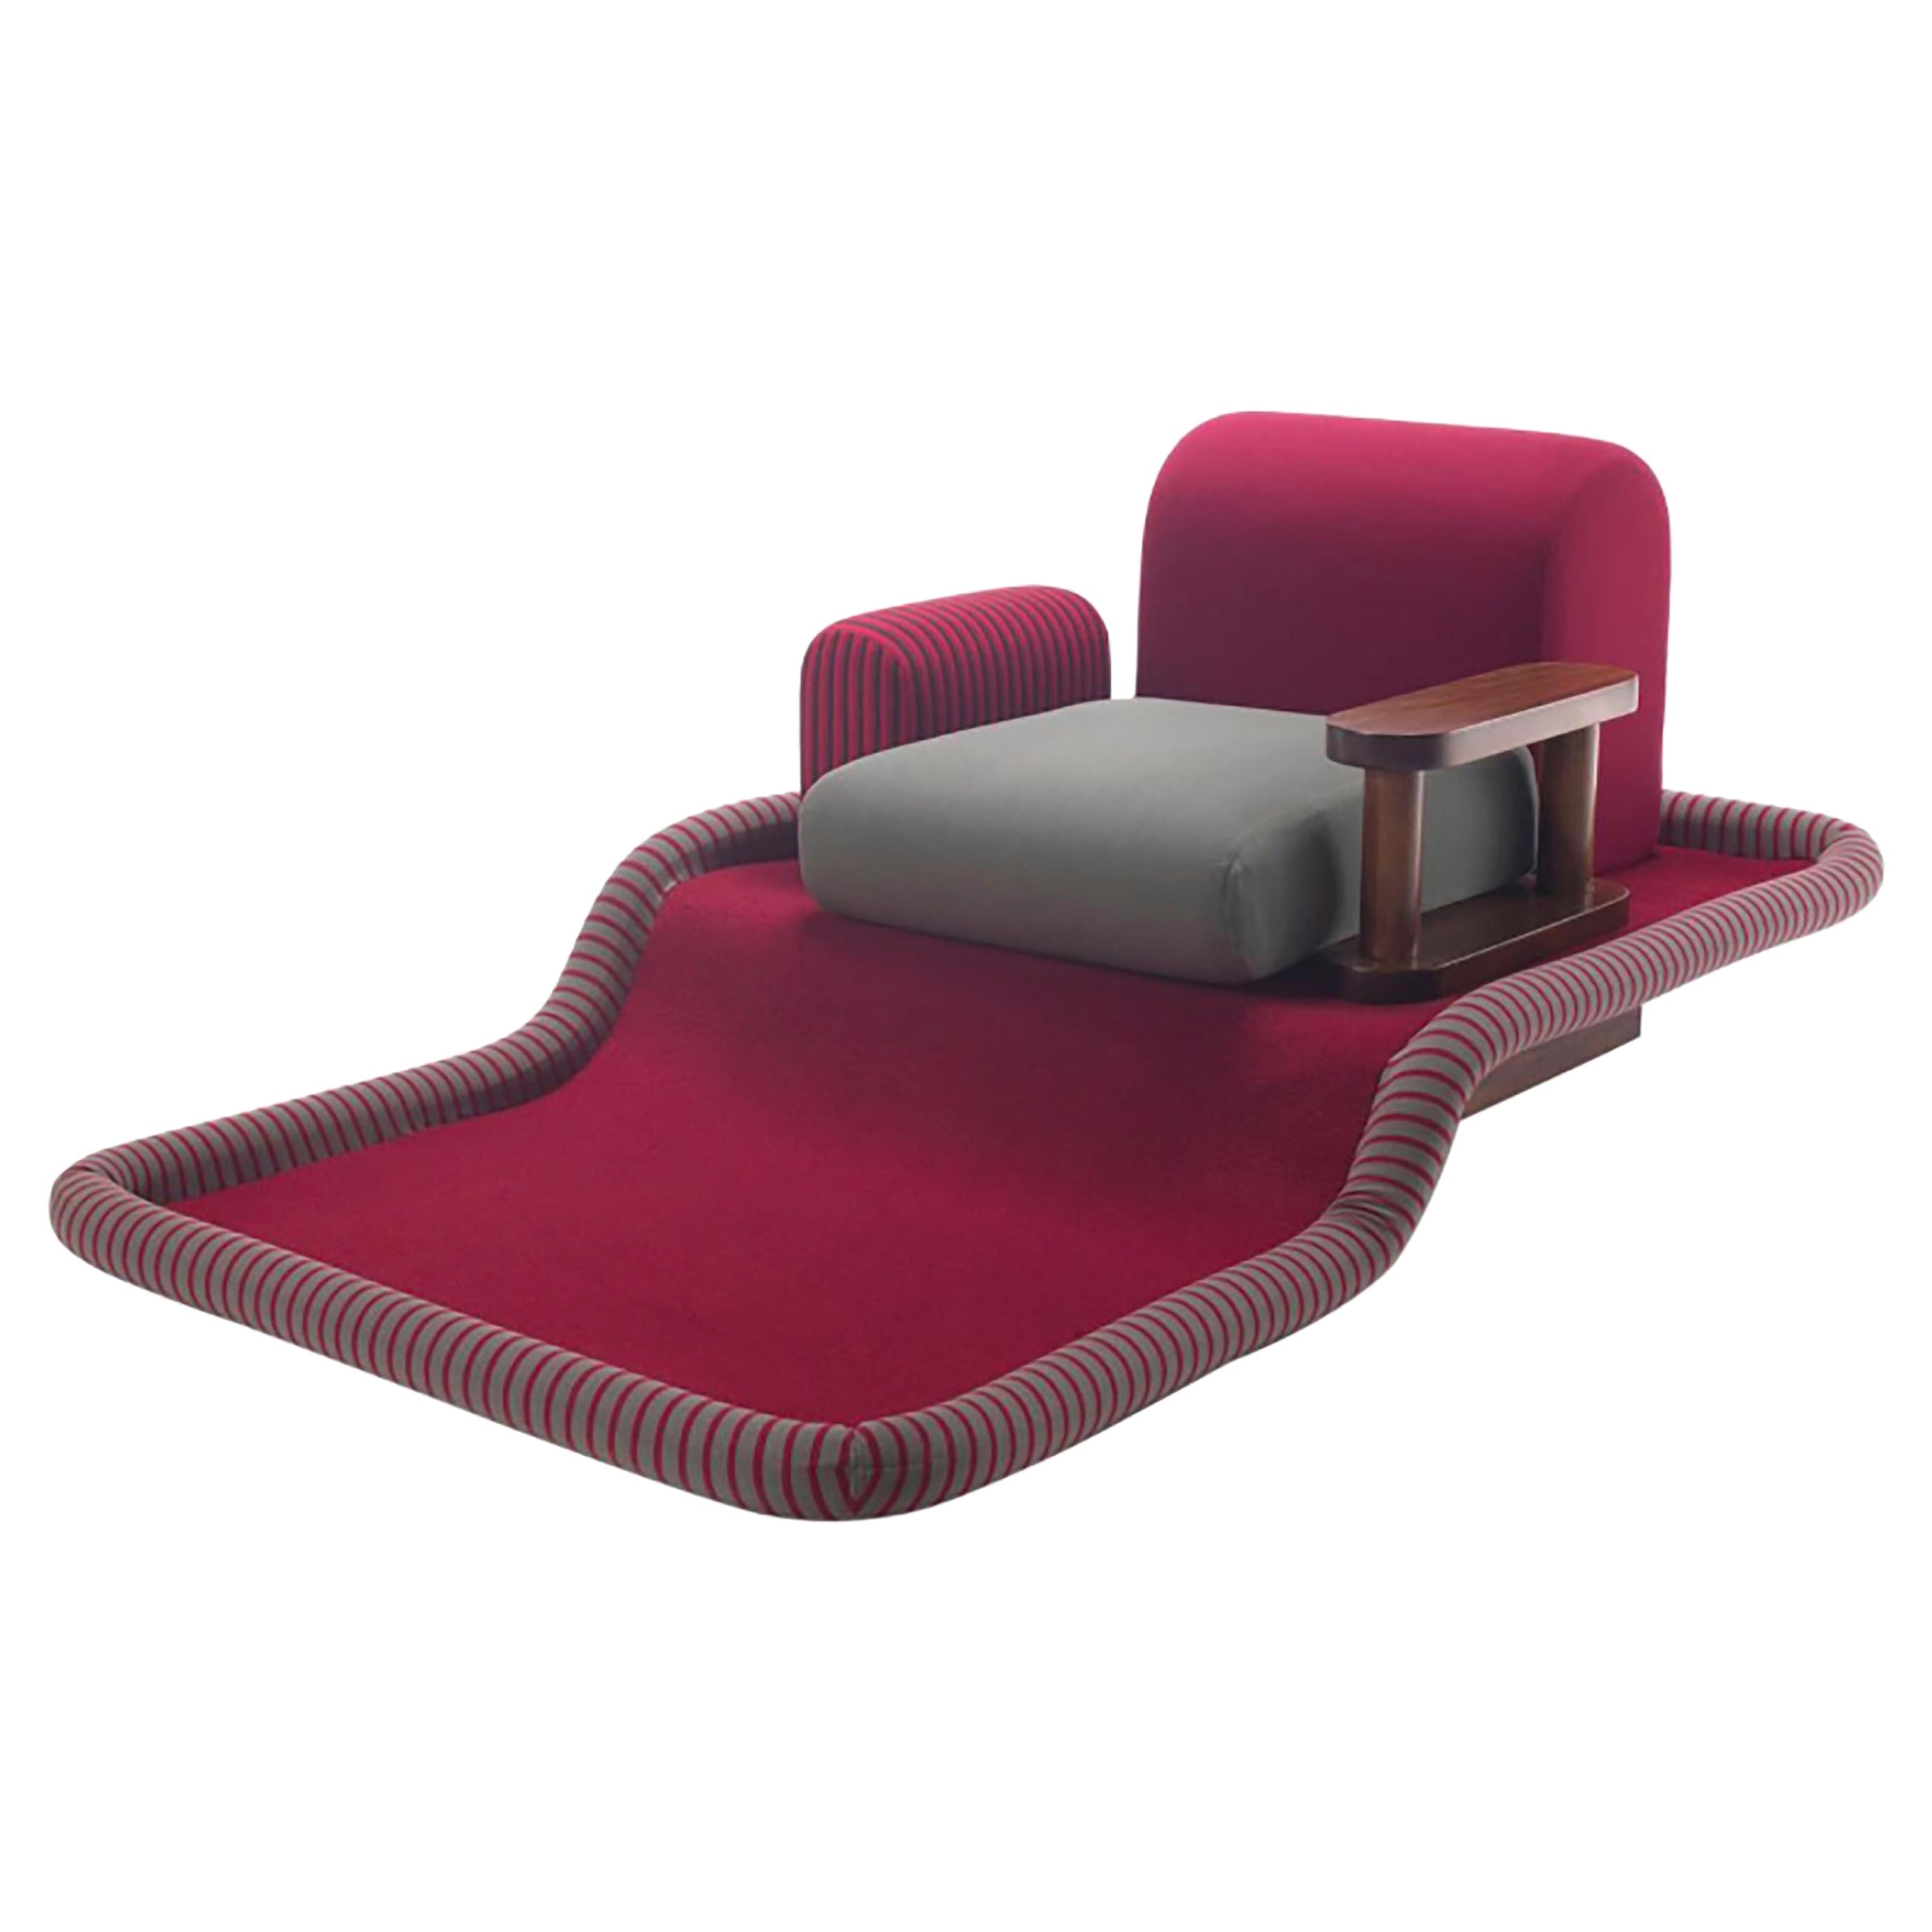 Flying Carpet Sofa For Sale